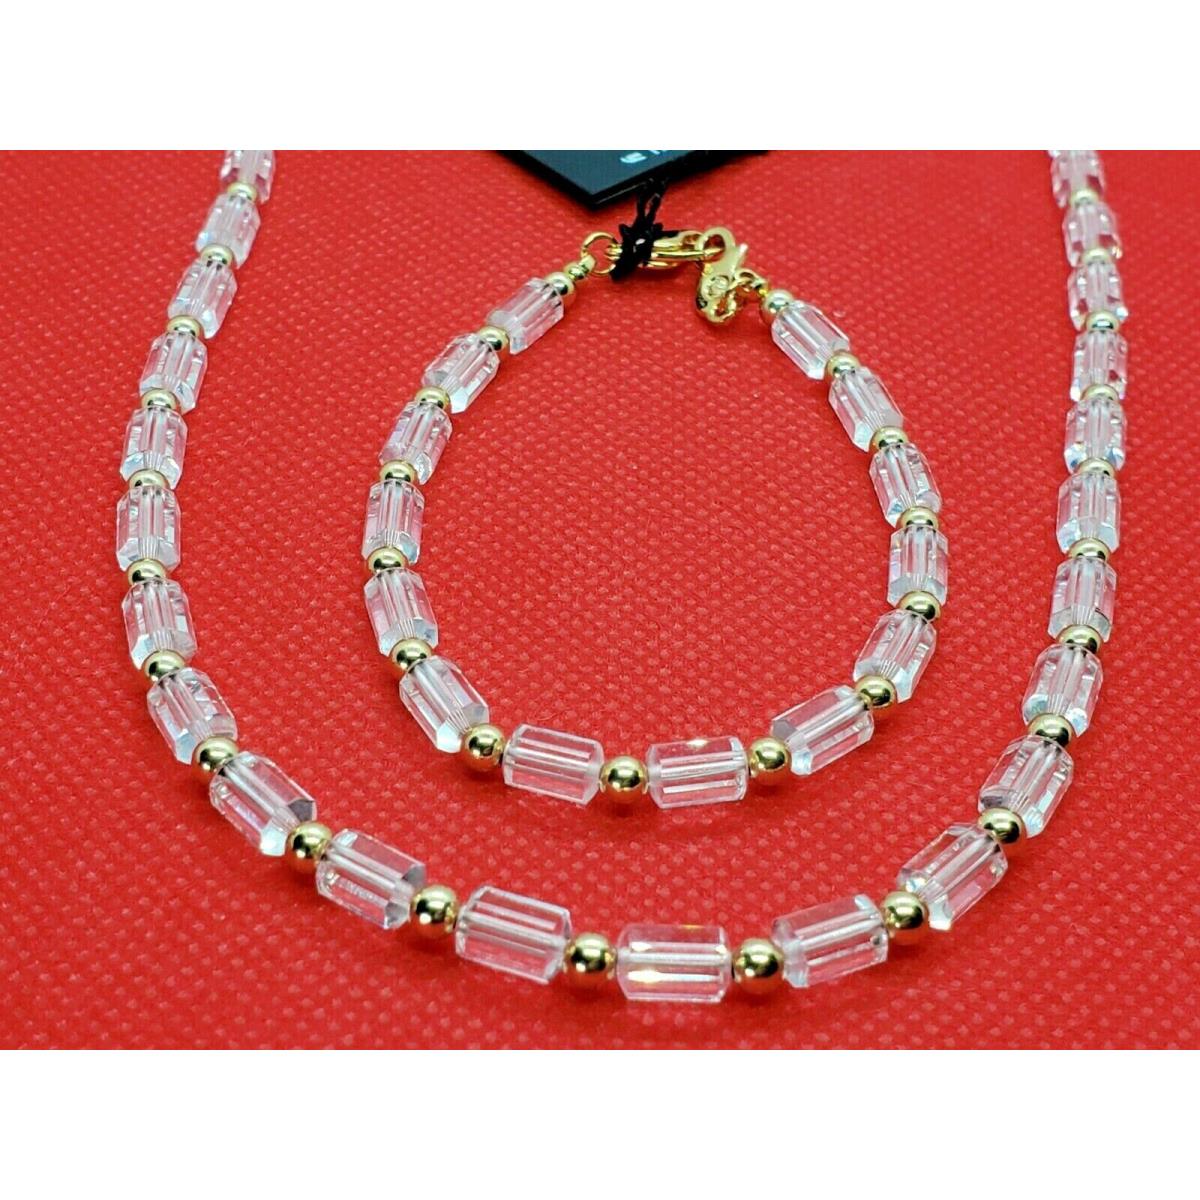 Swan Swarovski Crystal Necklace and Bracelet Set